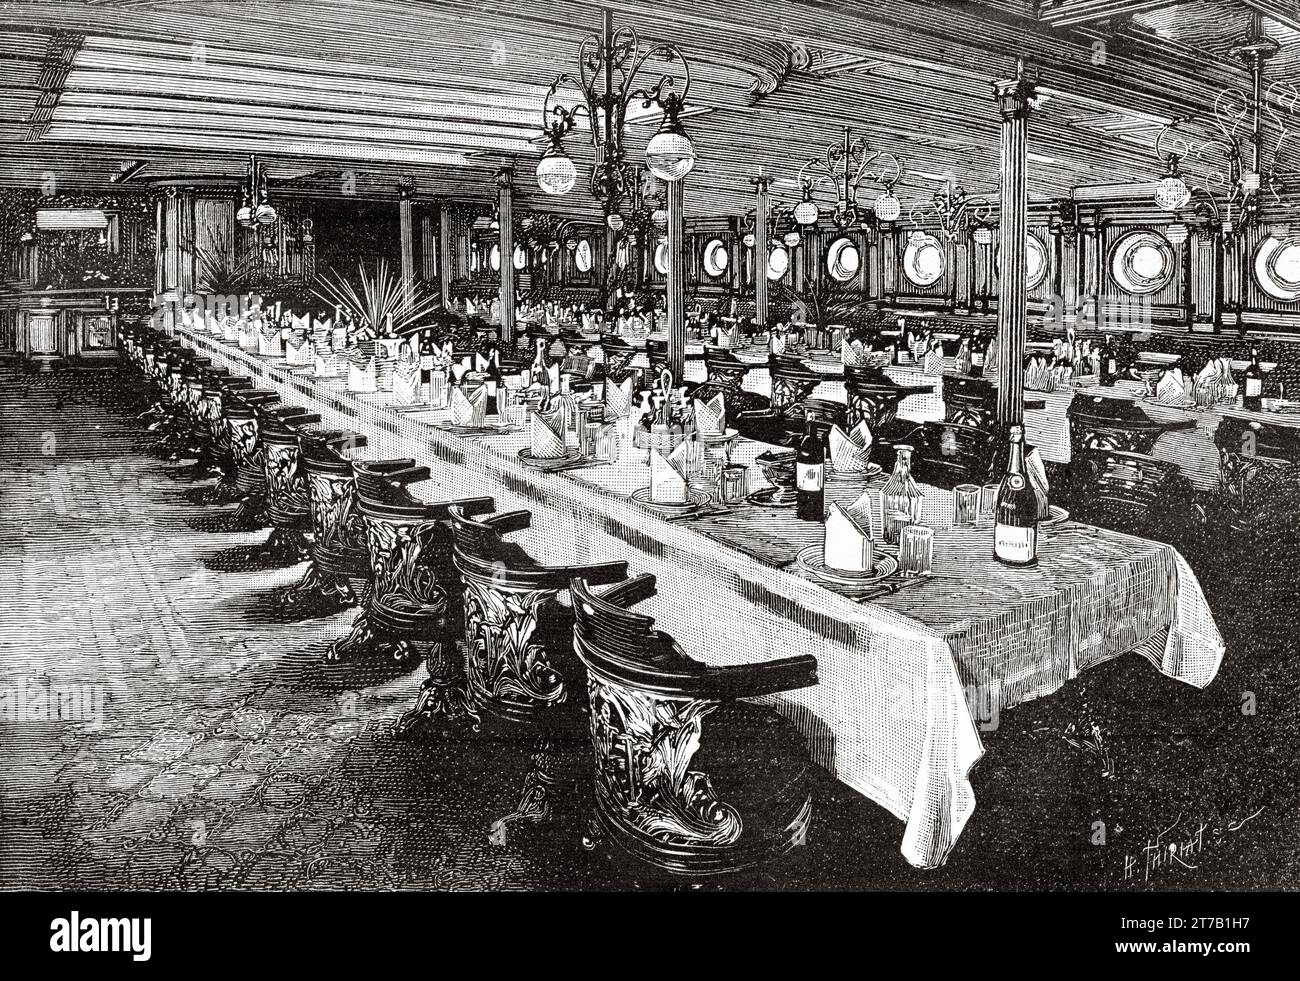 Paquebot la Gascogne. Dining room of the new transatlantic liner La Gascogne. Old illustration from La Nature 1887 Stock Photo